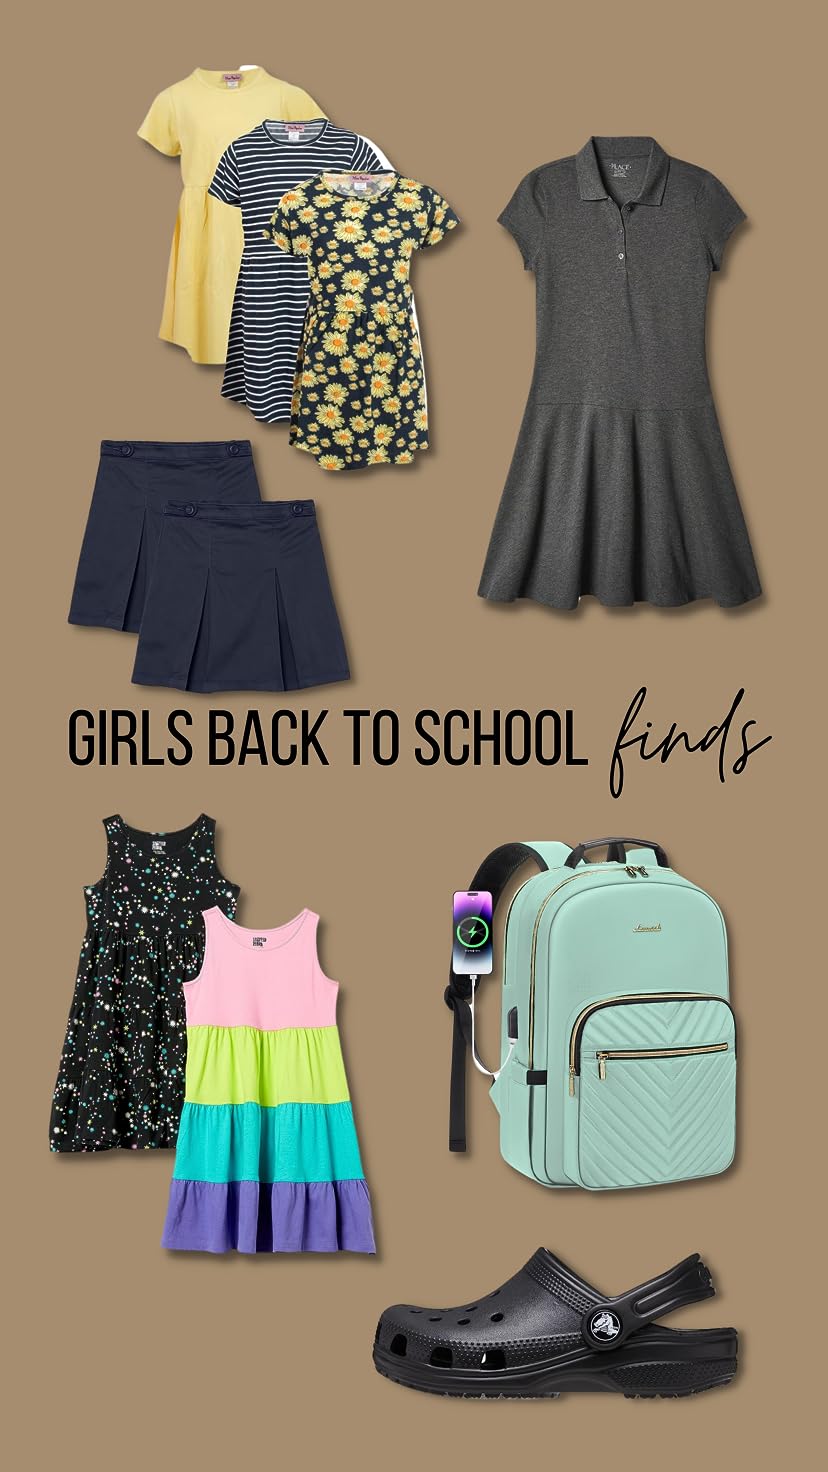 Girls back to school clothes! #founditonamazon